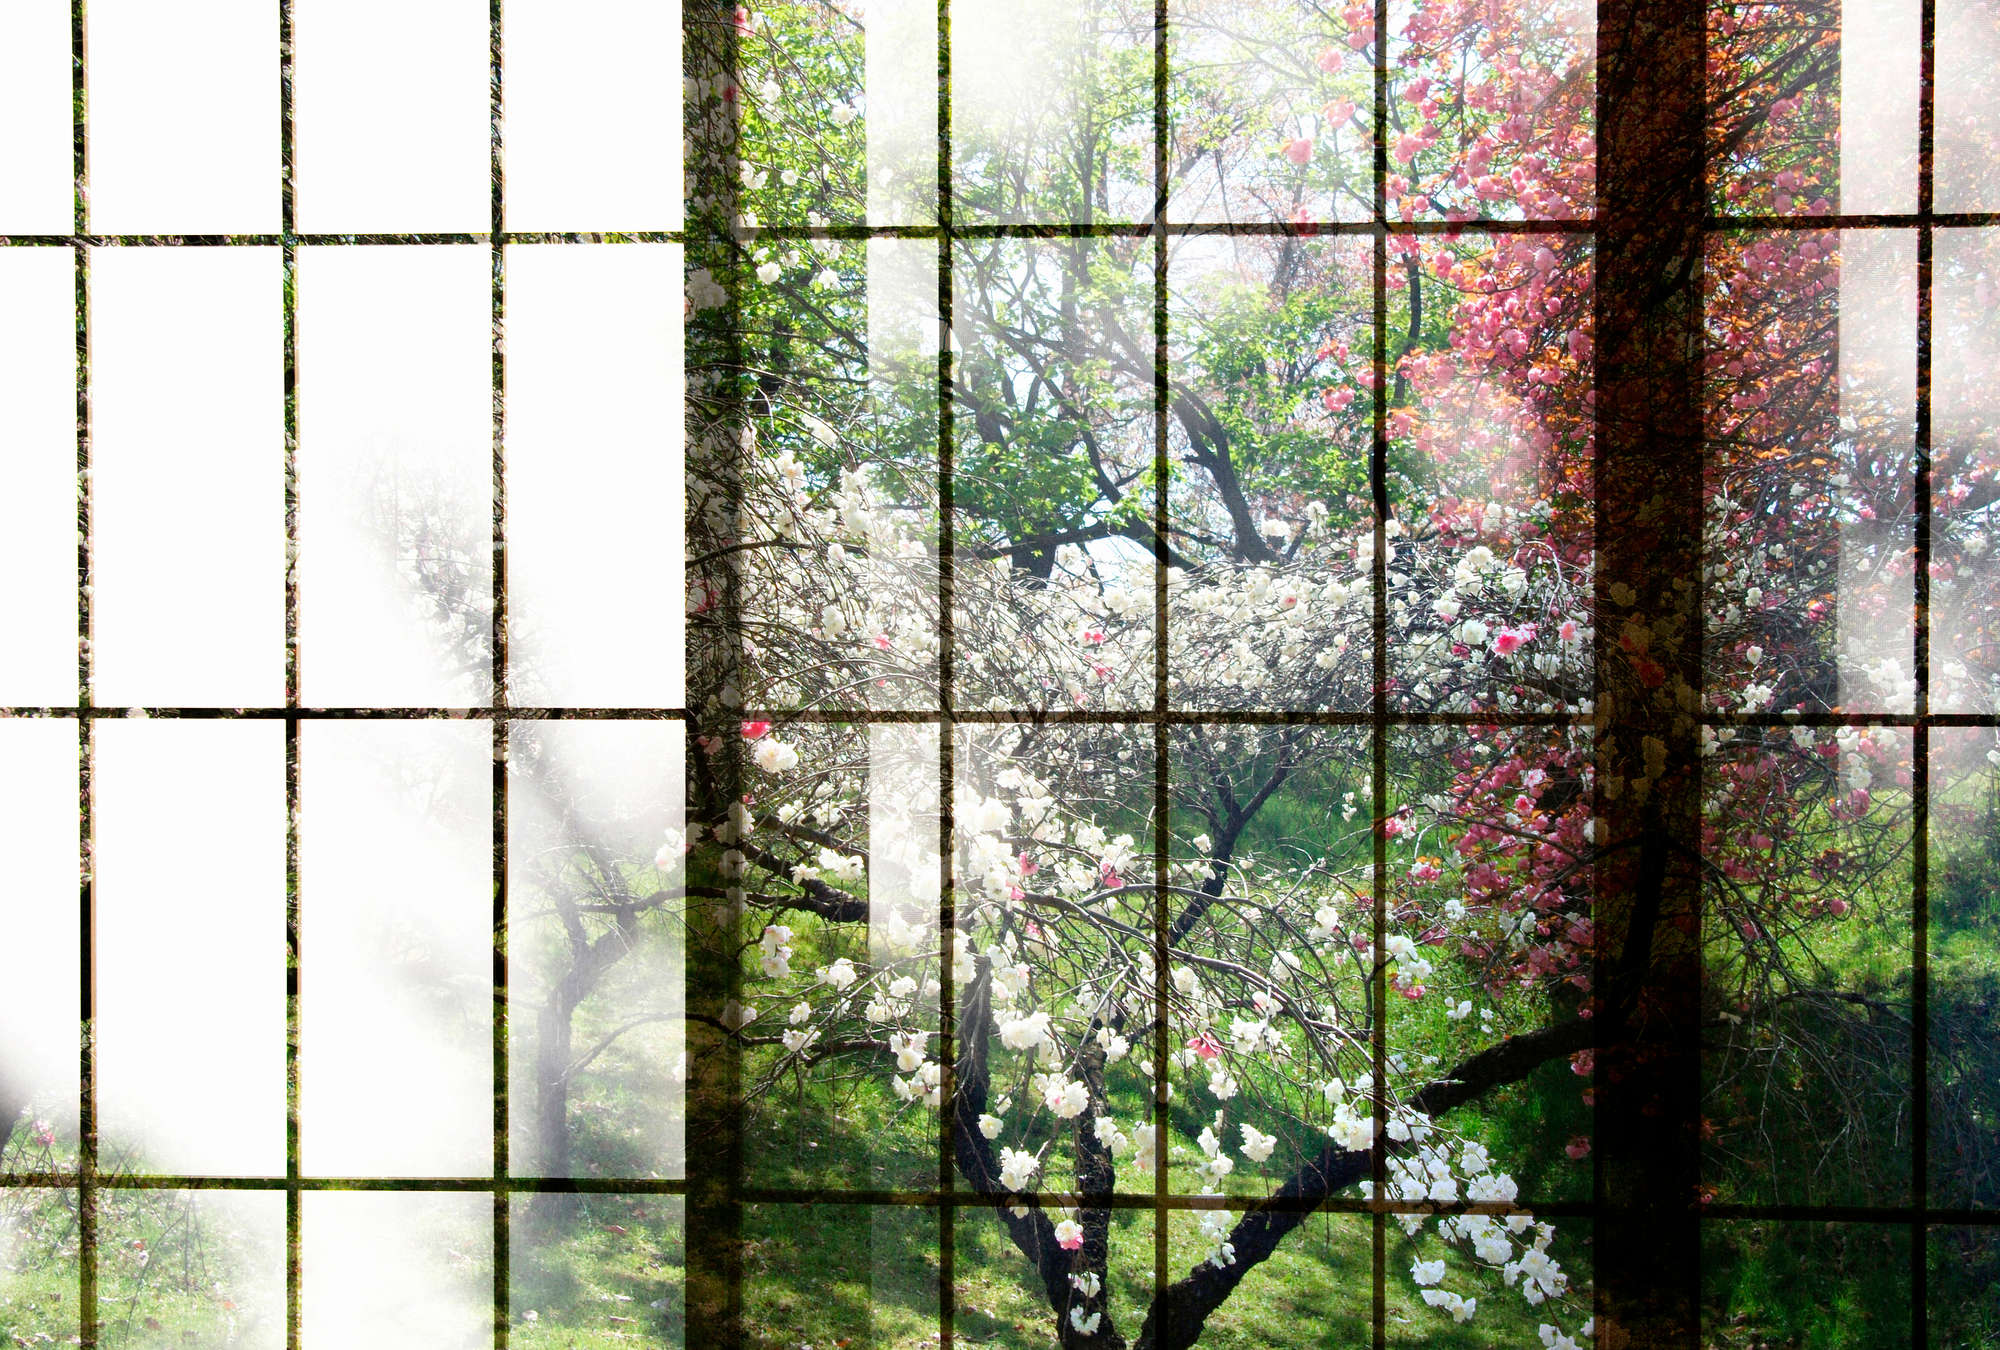             Orchard 2 - Fototapete, Fenster mit Garten Ausblick – Grün, Rosa | Perlmutt Glattvlies
        